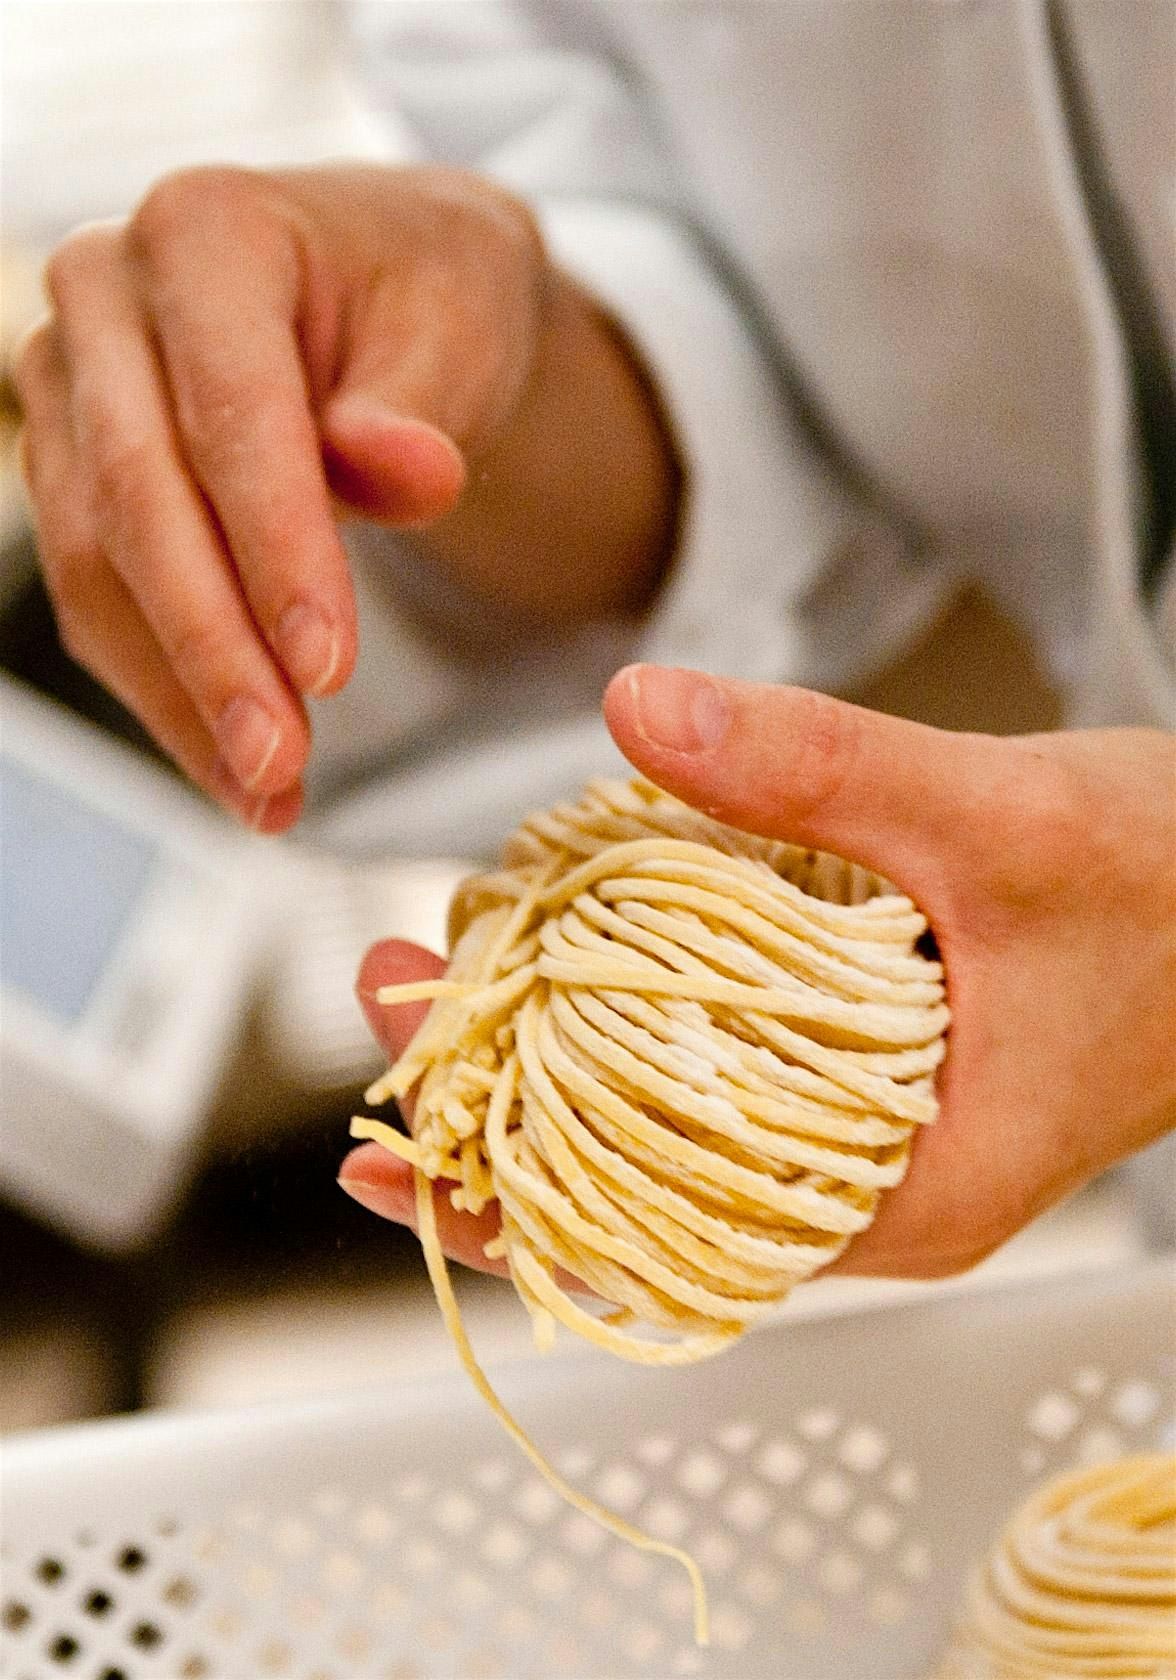 Hands-On Fresh Pasta-Making 101 Workshop at 1:00pm